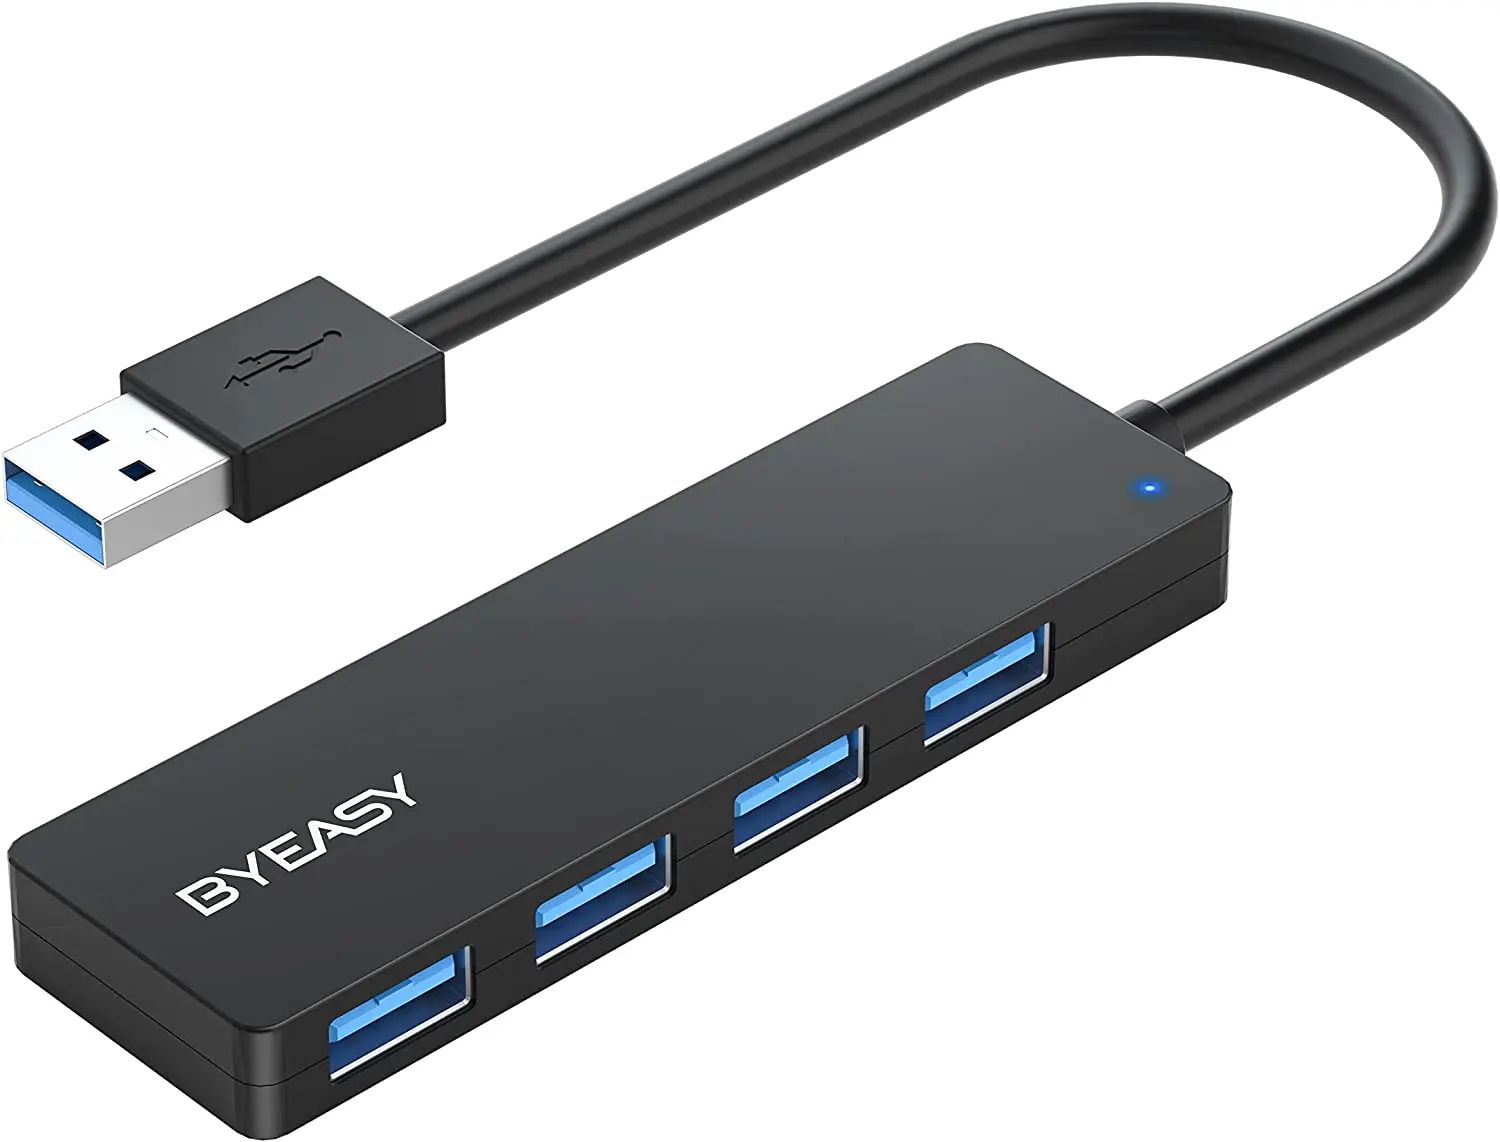 

USB Hub, BYEASY 4 Port USB 3.0 Hub, Ultra Slim Portable Data Hub Applicable for iMac Pro, MacBook Air, Mac Mini/Pro, Surface